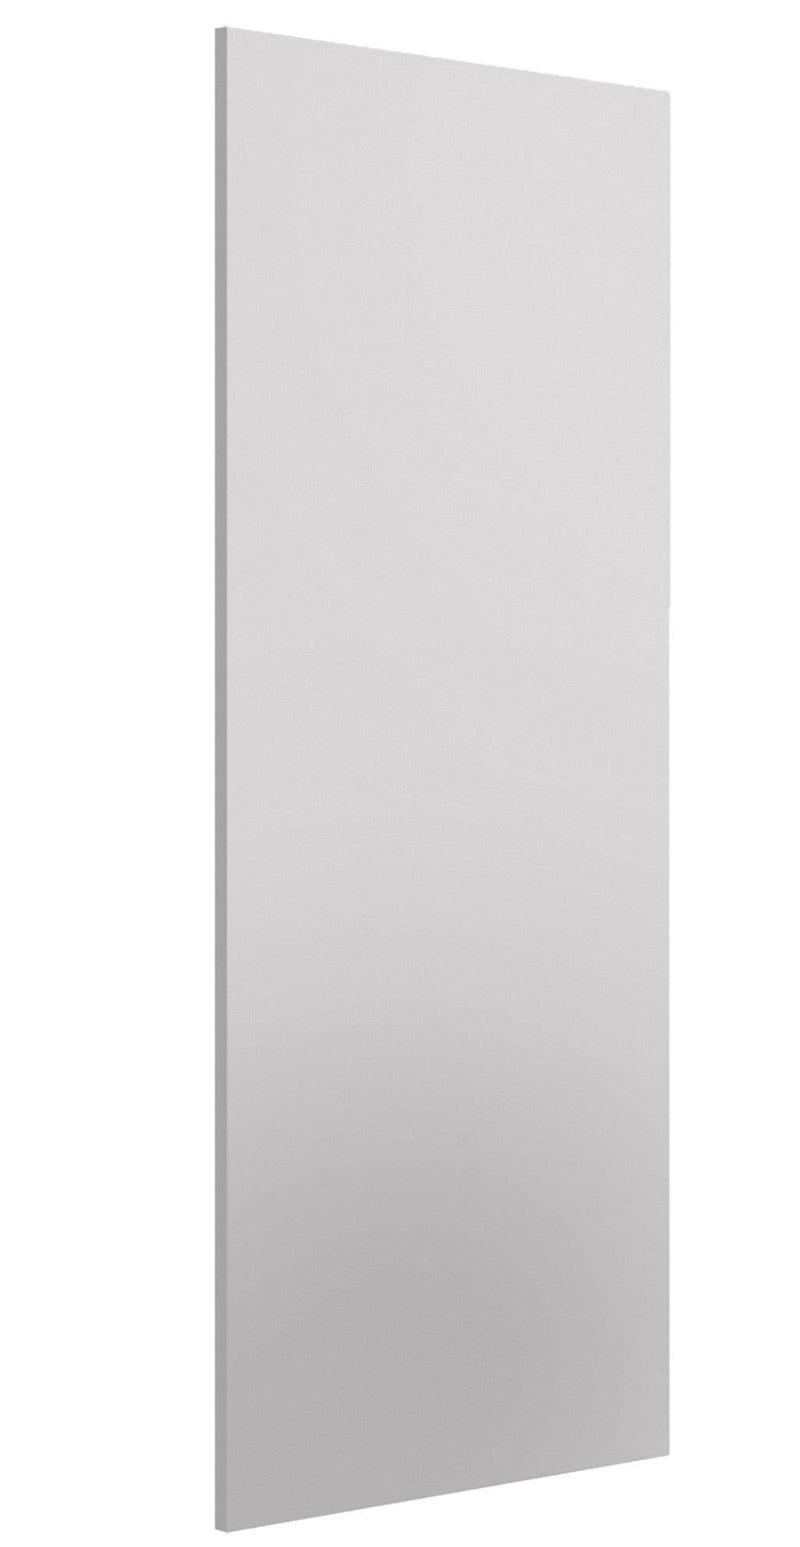 End Panels Craft Wood & Shapes M4TEC Light Grey / Dove Grey 